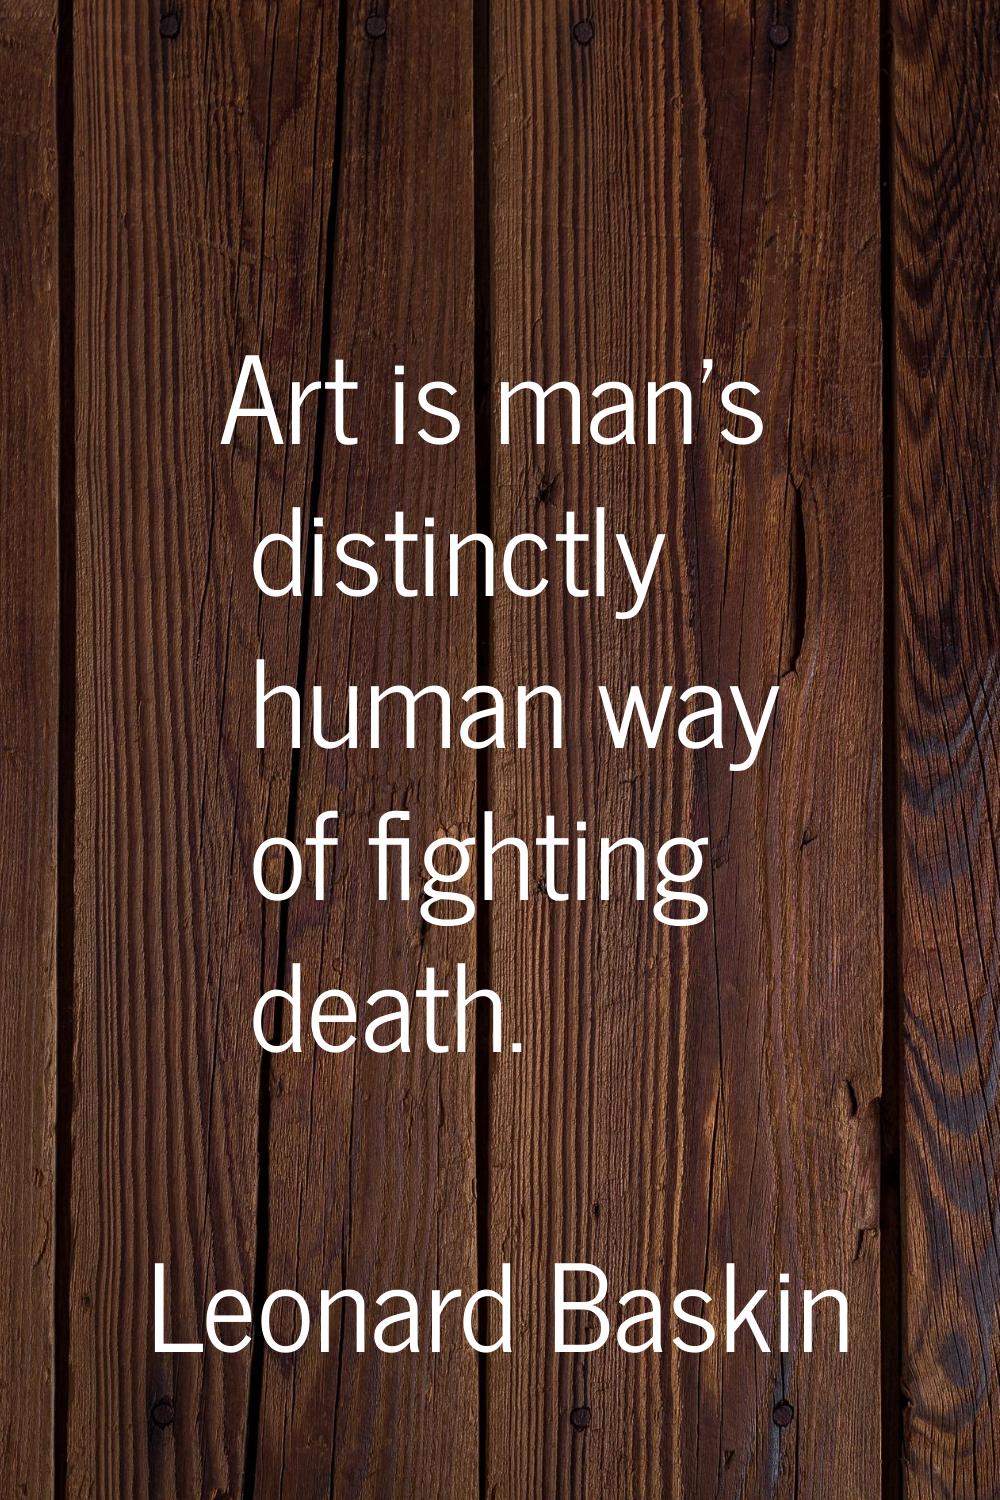 Art is man's distinctly human way of fighting death.